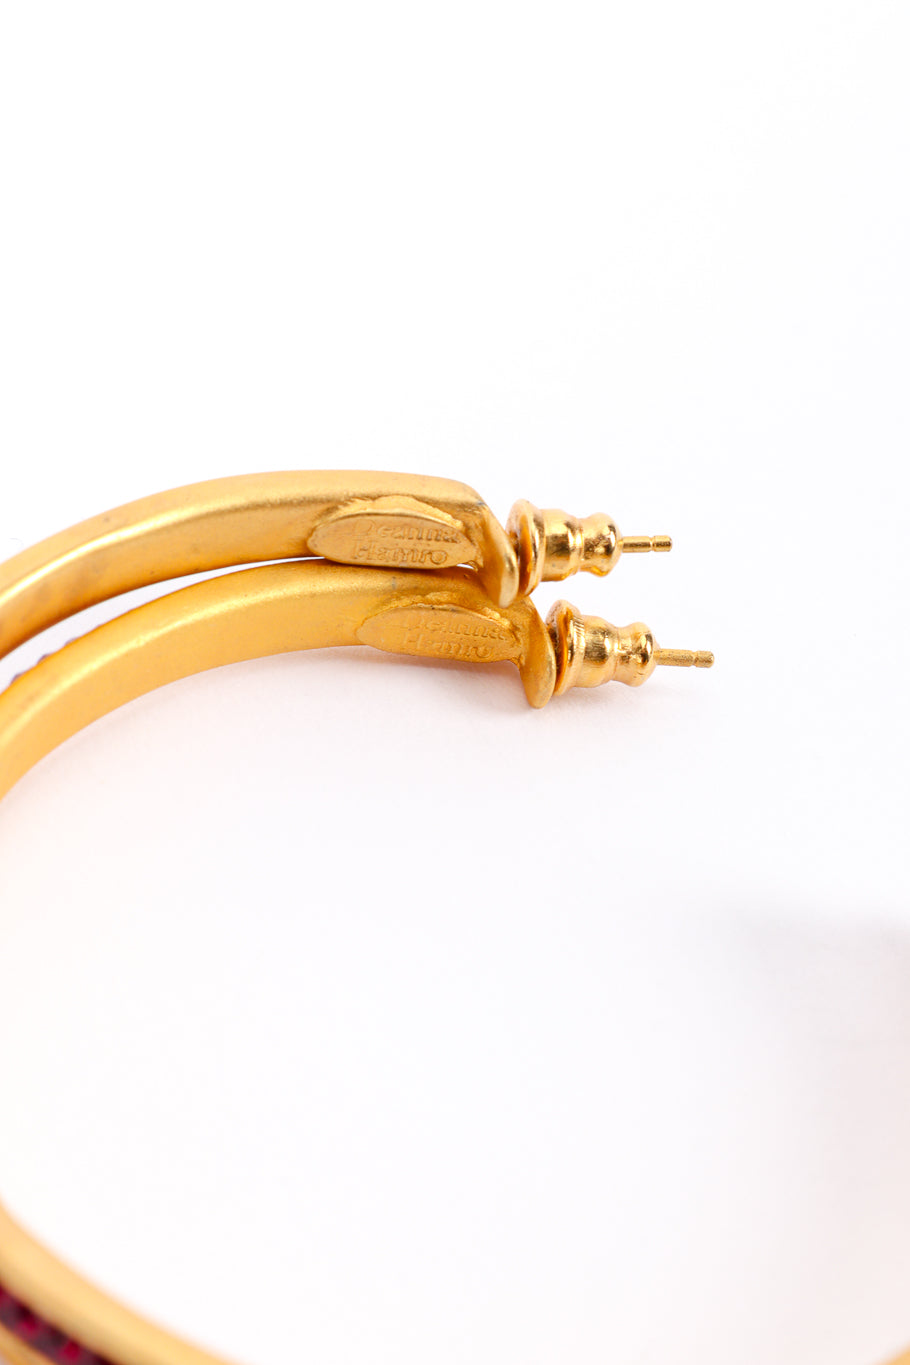 Rhinestone Hoop Earrings by Deanna Hamro cartouches @recessla